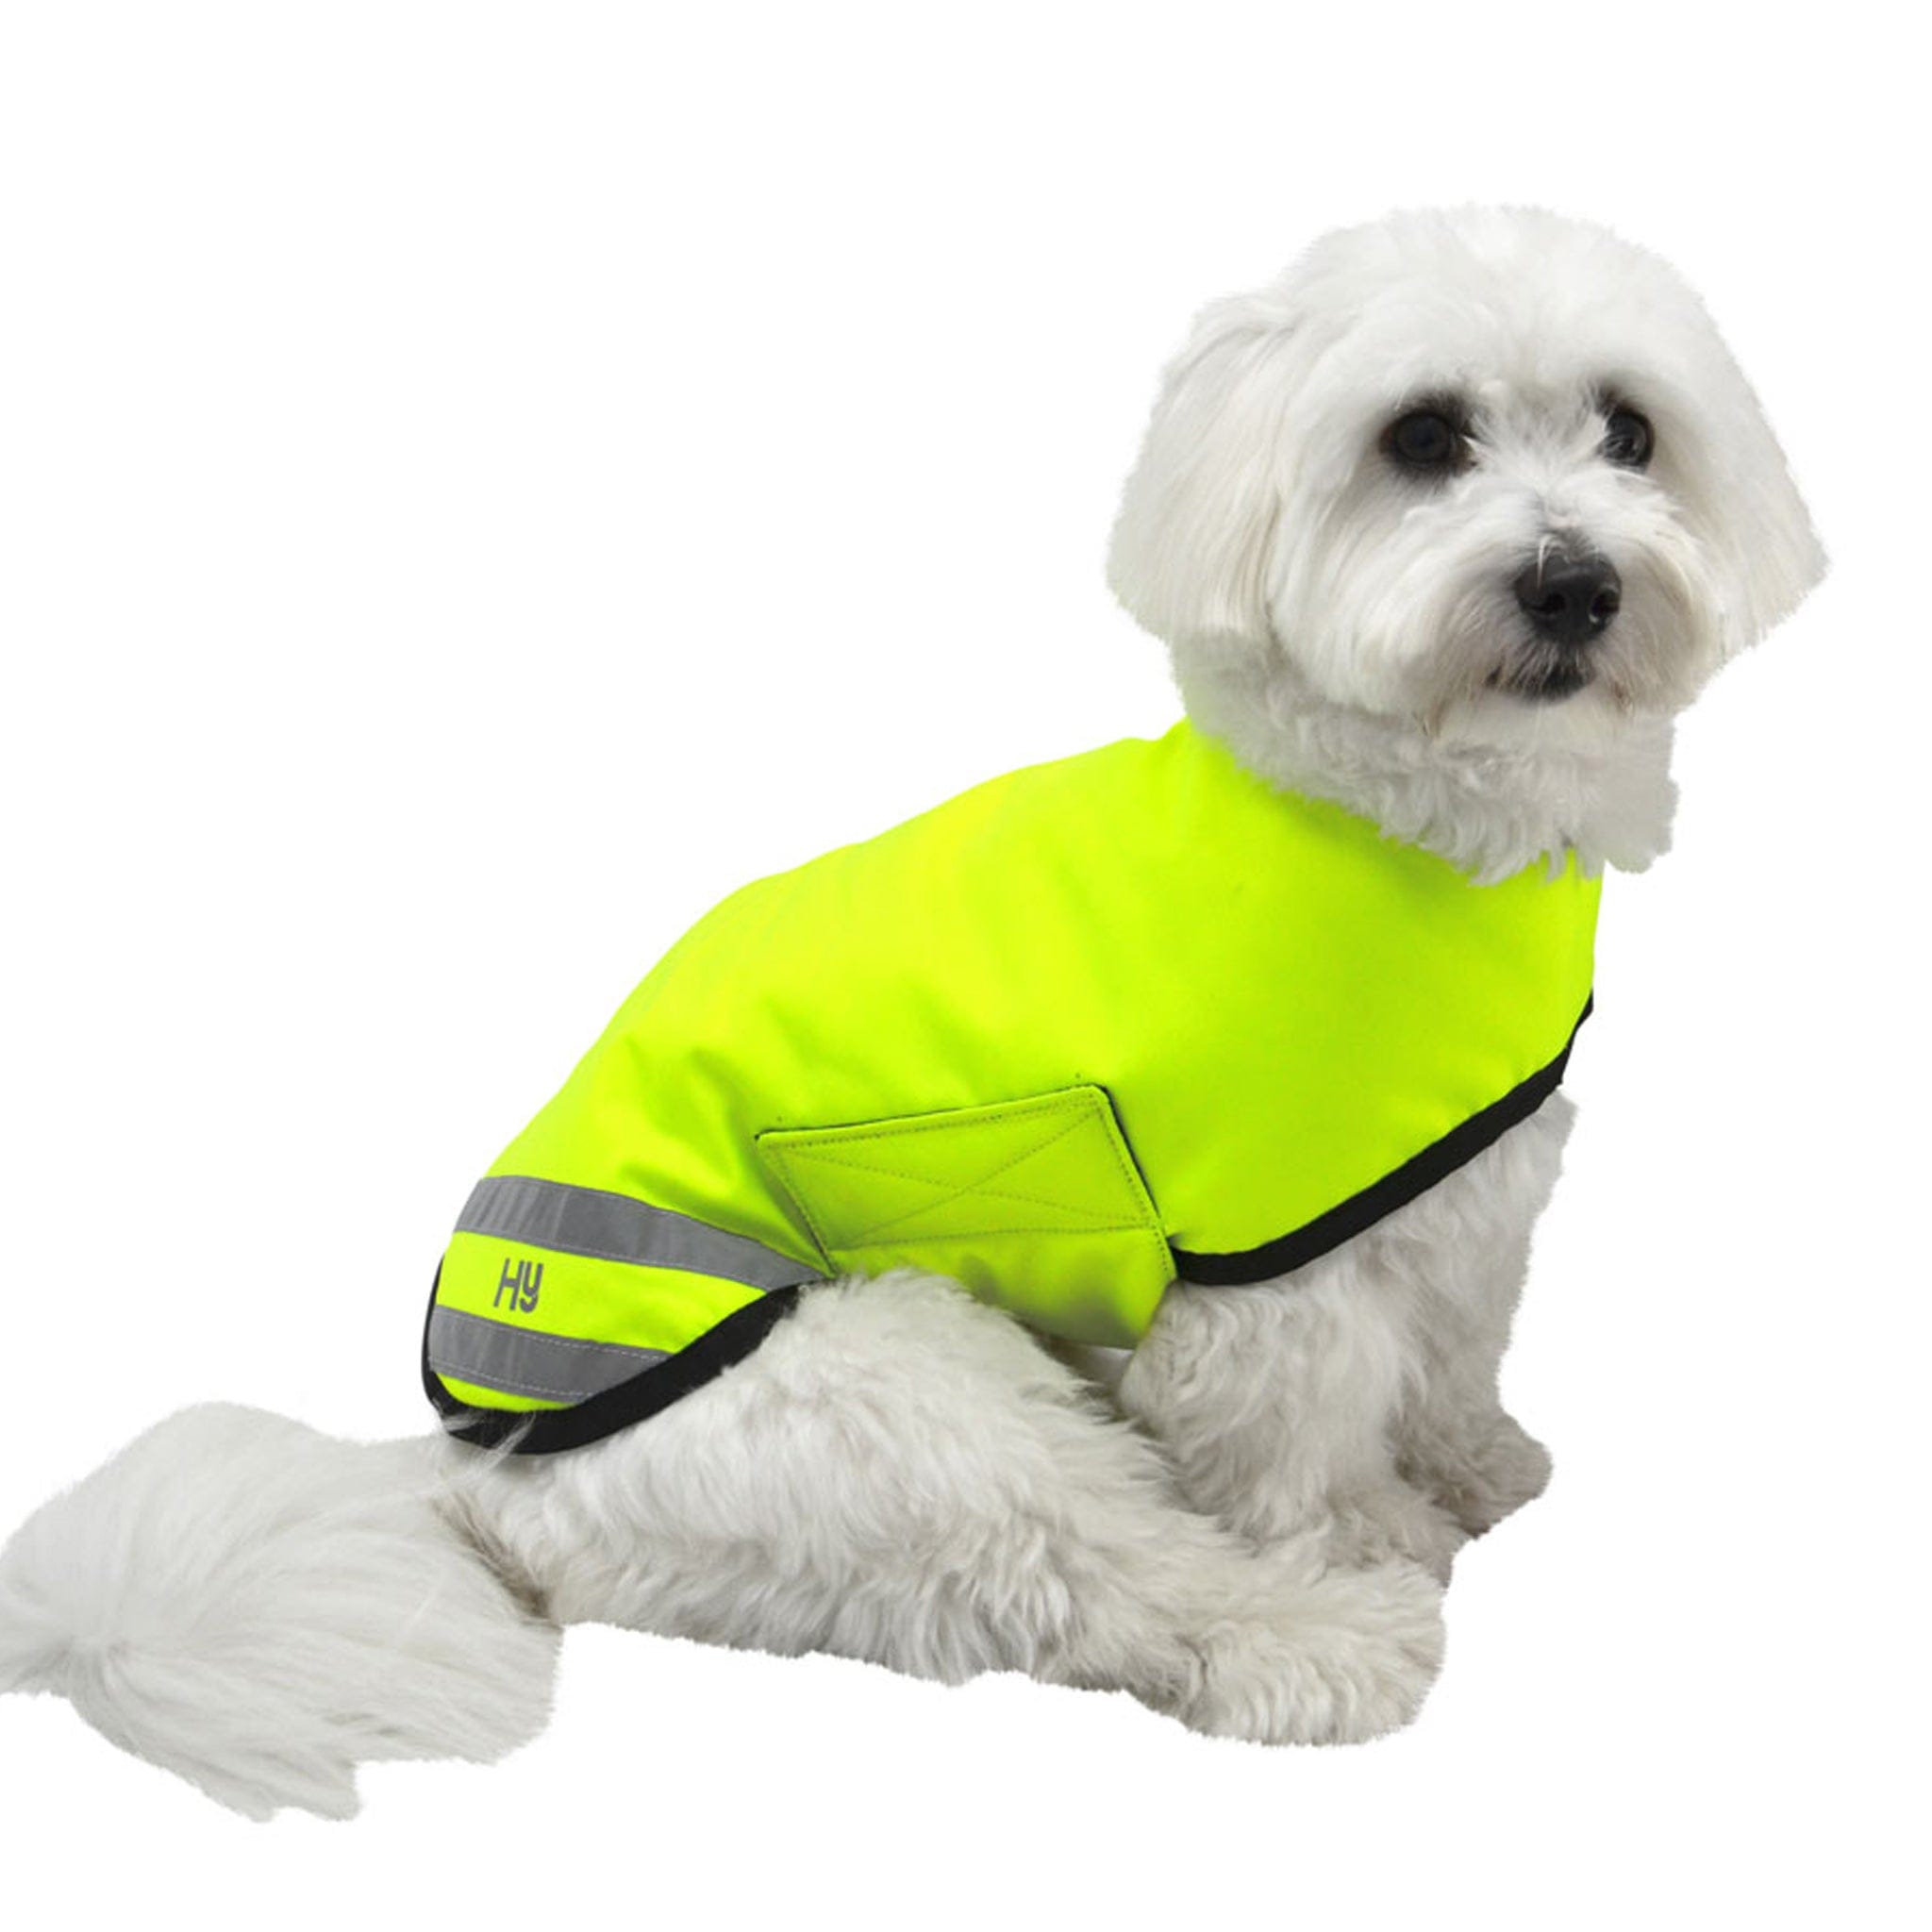 Hy Equestrian Hi-Viz Reflector Waterproof Dog Coat 22019 Yellow On Bichon Frise Sitting Side View